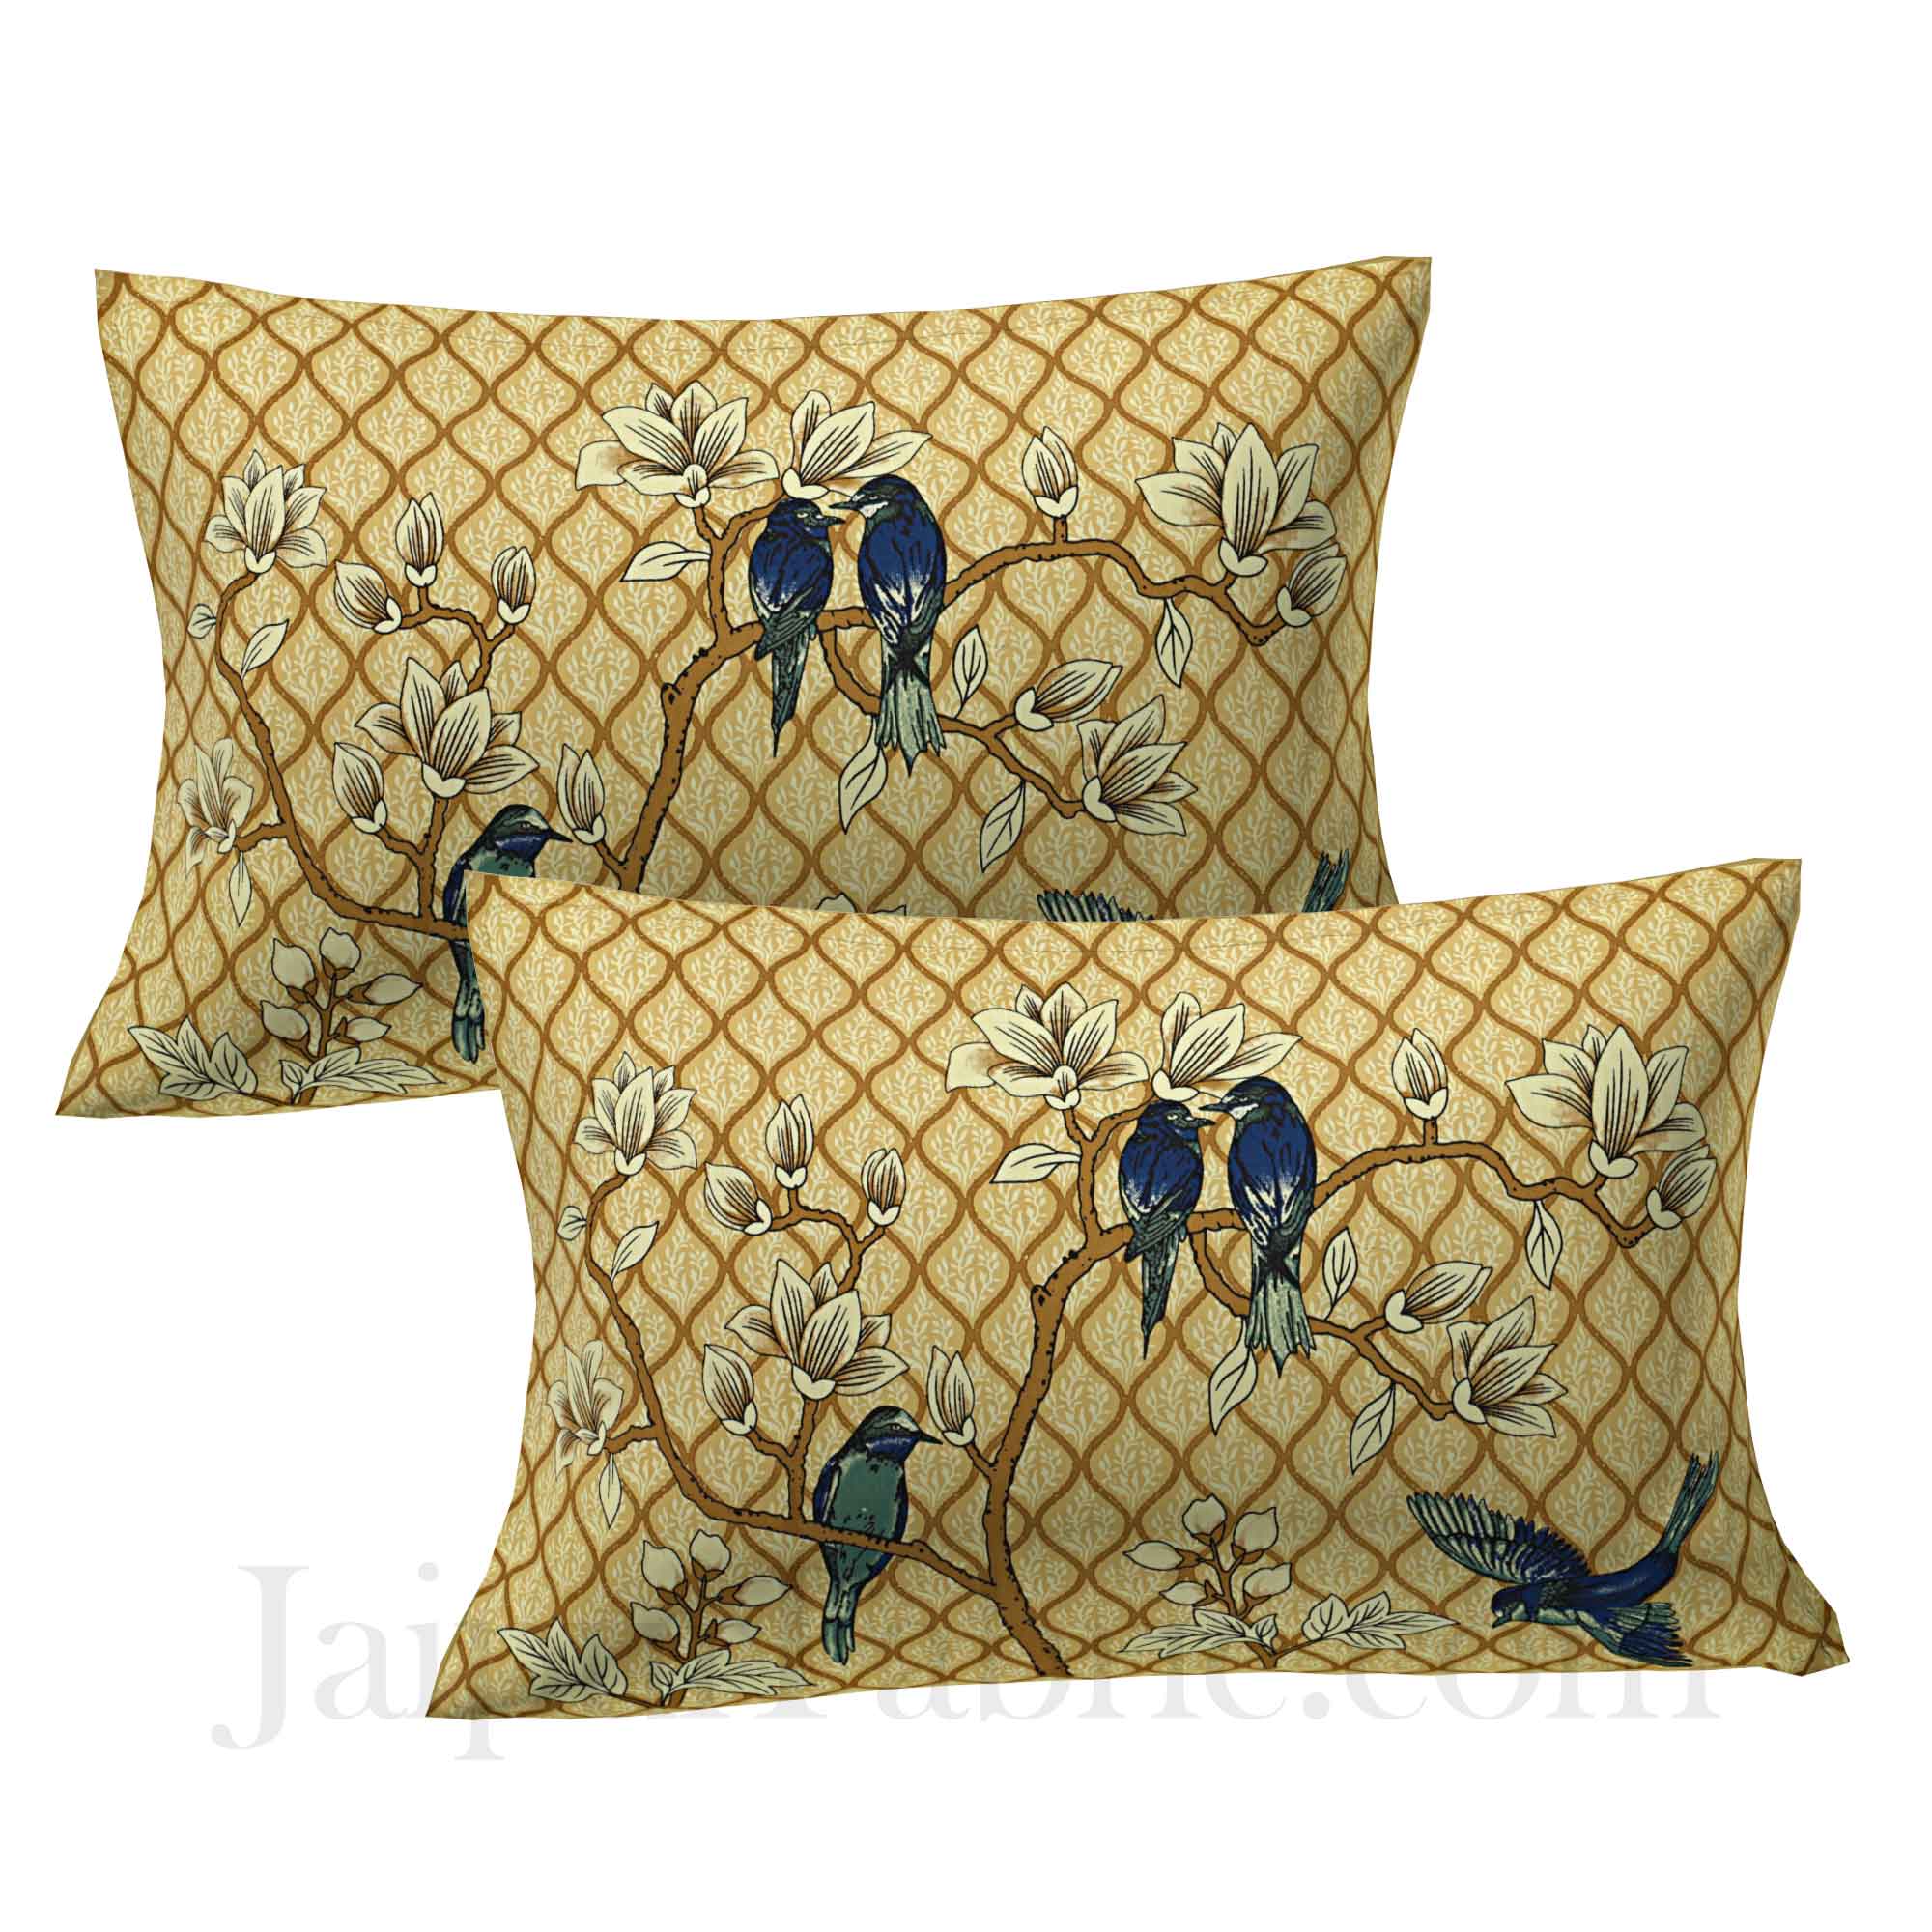 Golden Sparrow Cotton King Size Bedsheet